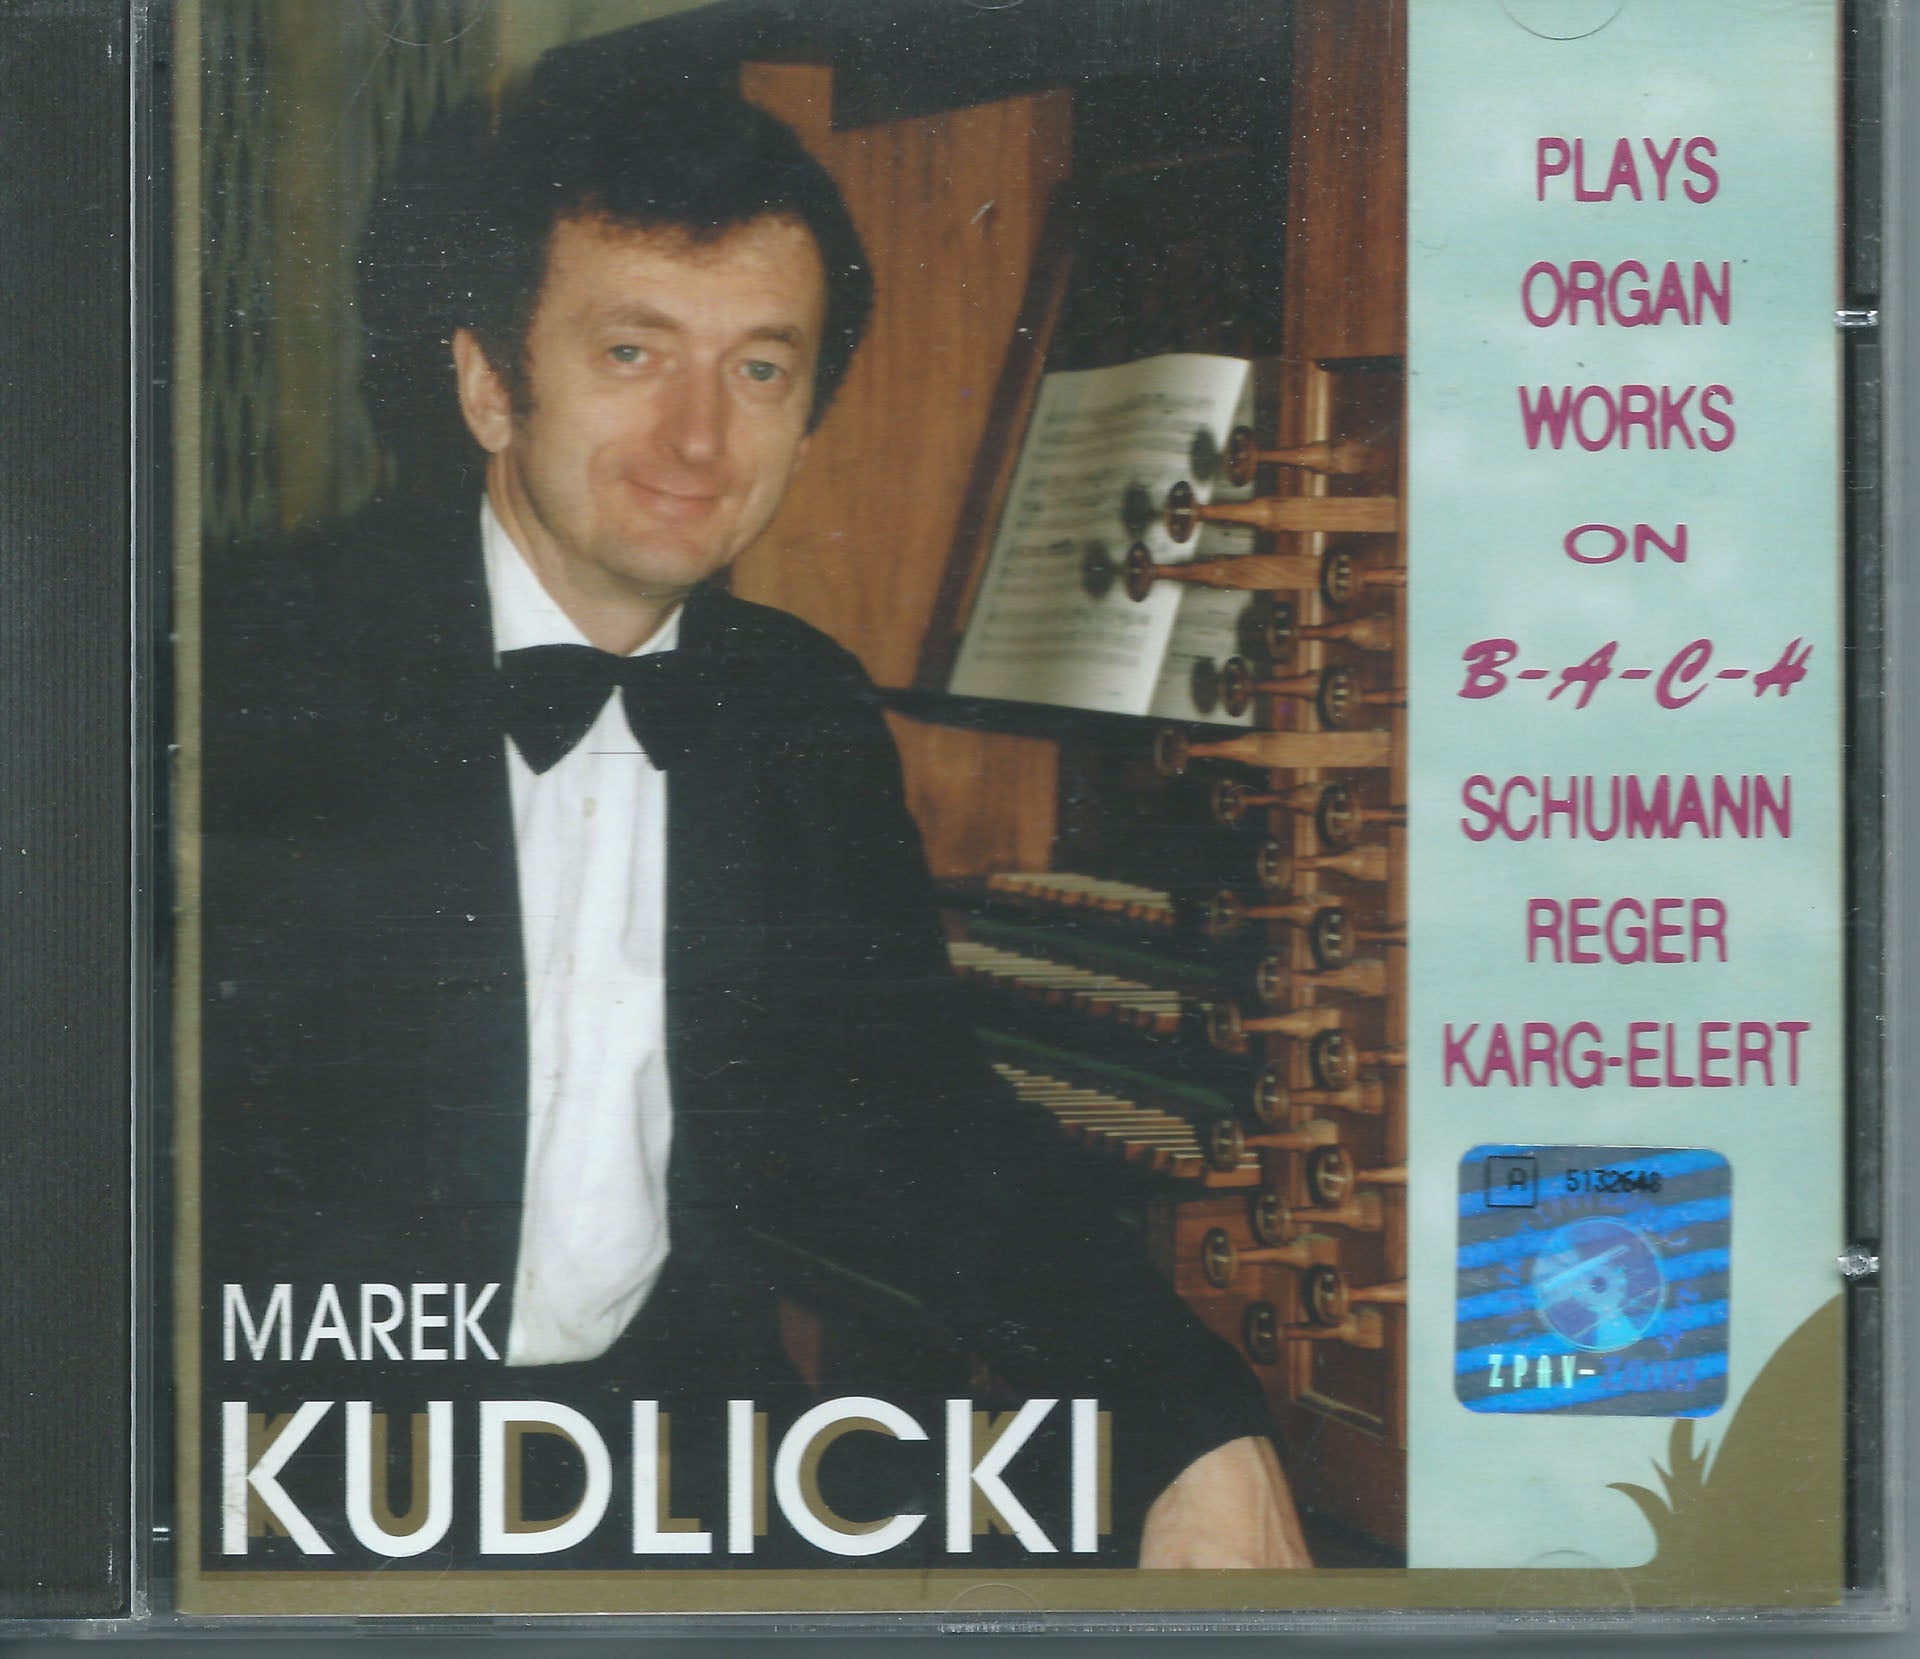 Marek Kudlicki plays organ works on Bach